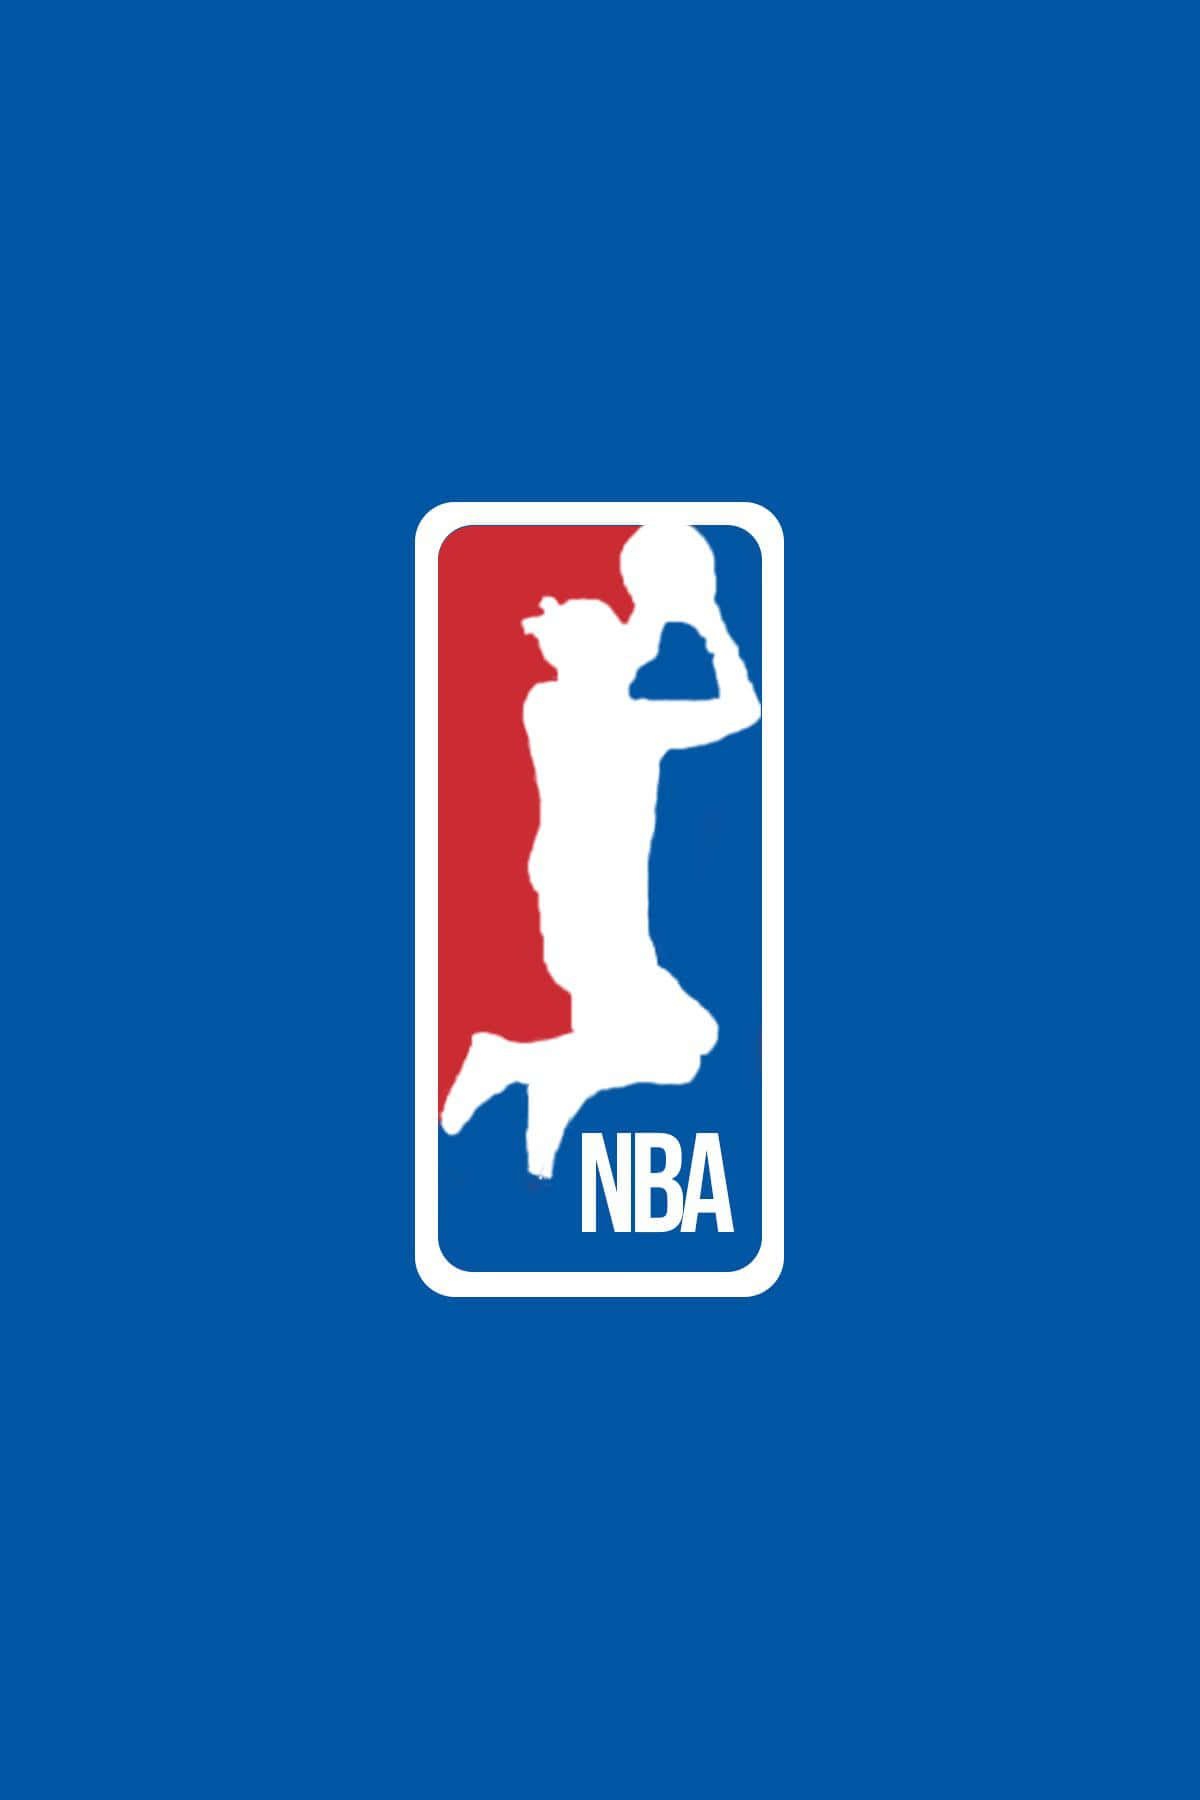 NBA logo PNG transparent image download size 1250x850px